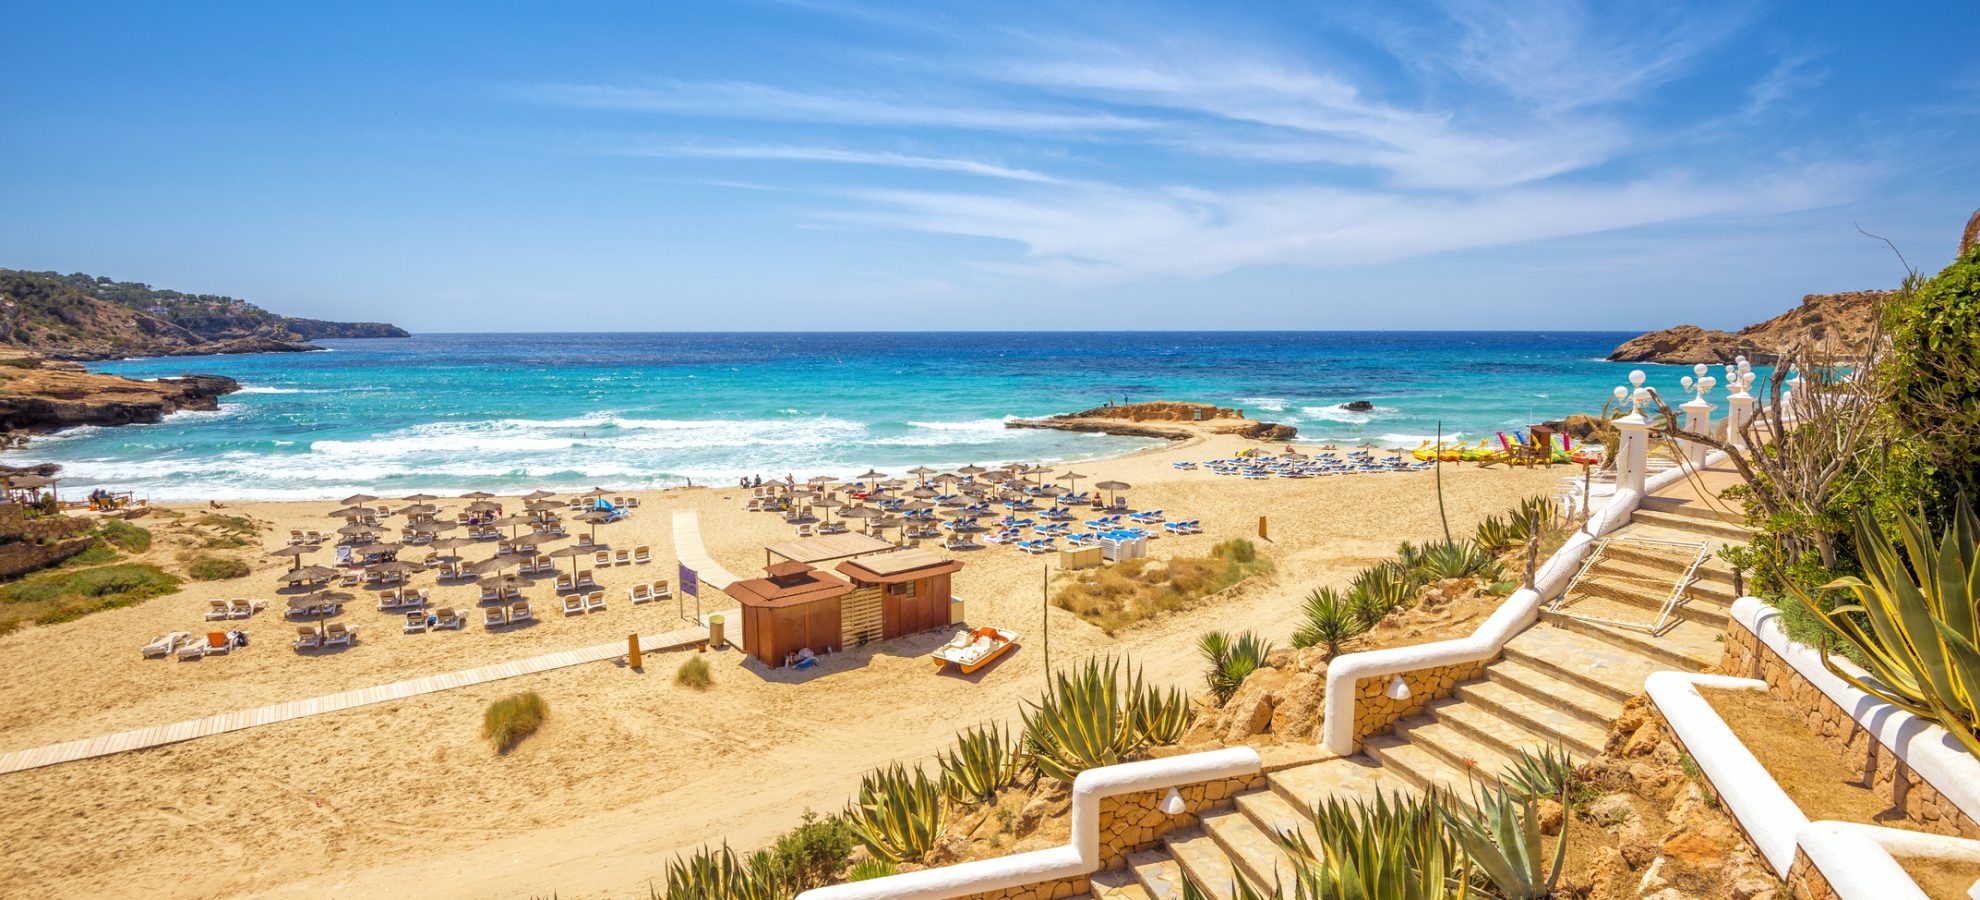 Beach and bay of Cala Tarida, Ibiza